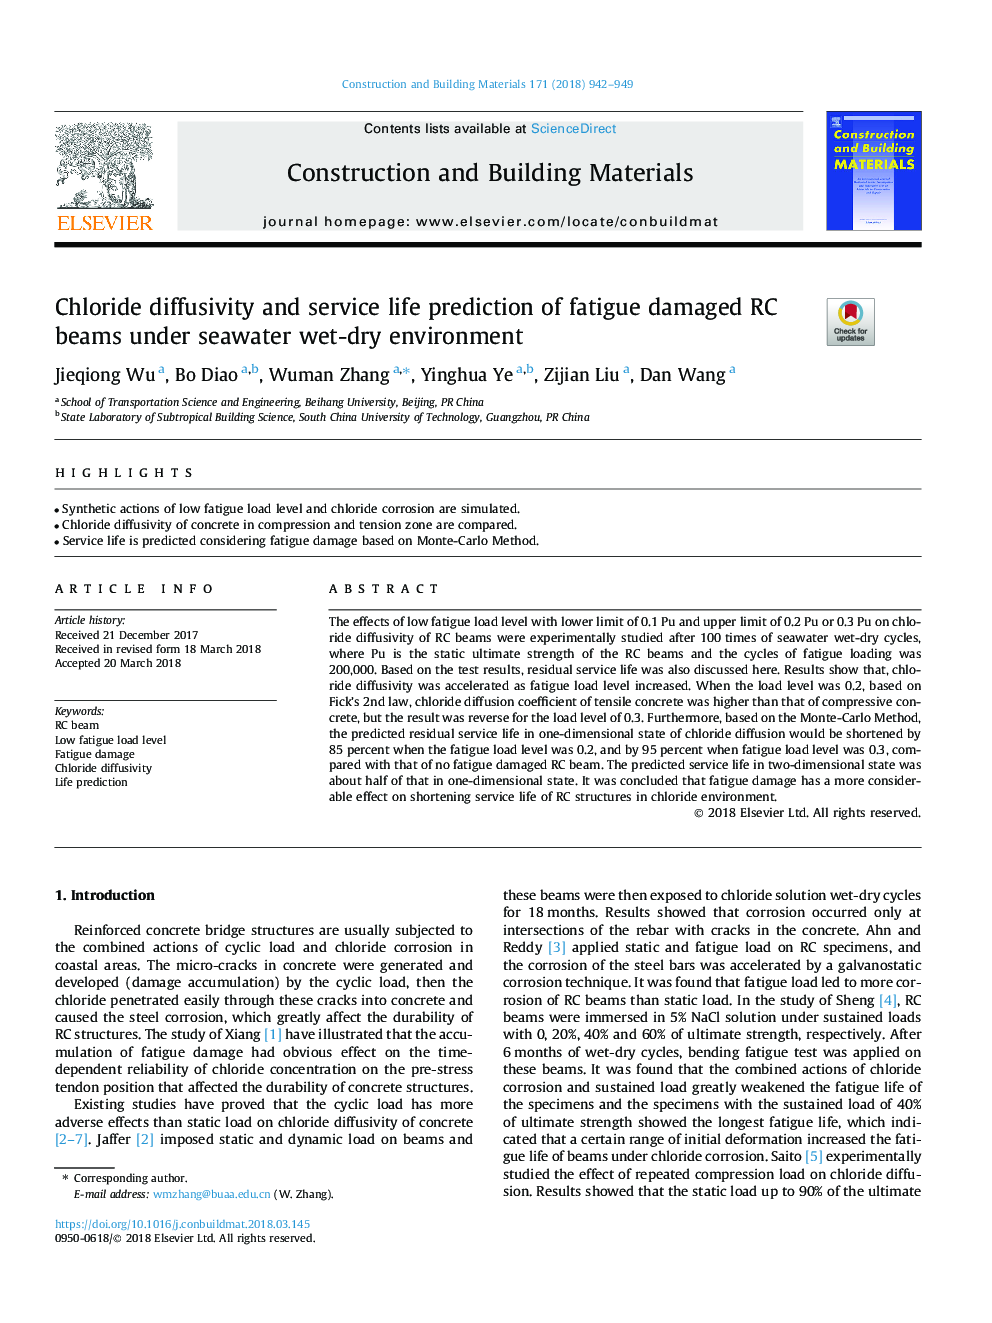 Chloride diffusivity and service life prediction of fatigue damaged RC beams under seawater wet-dry environment